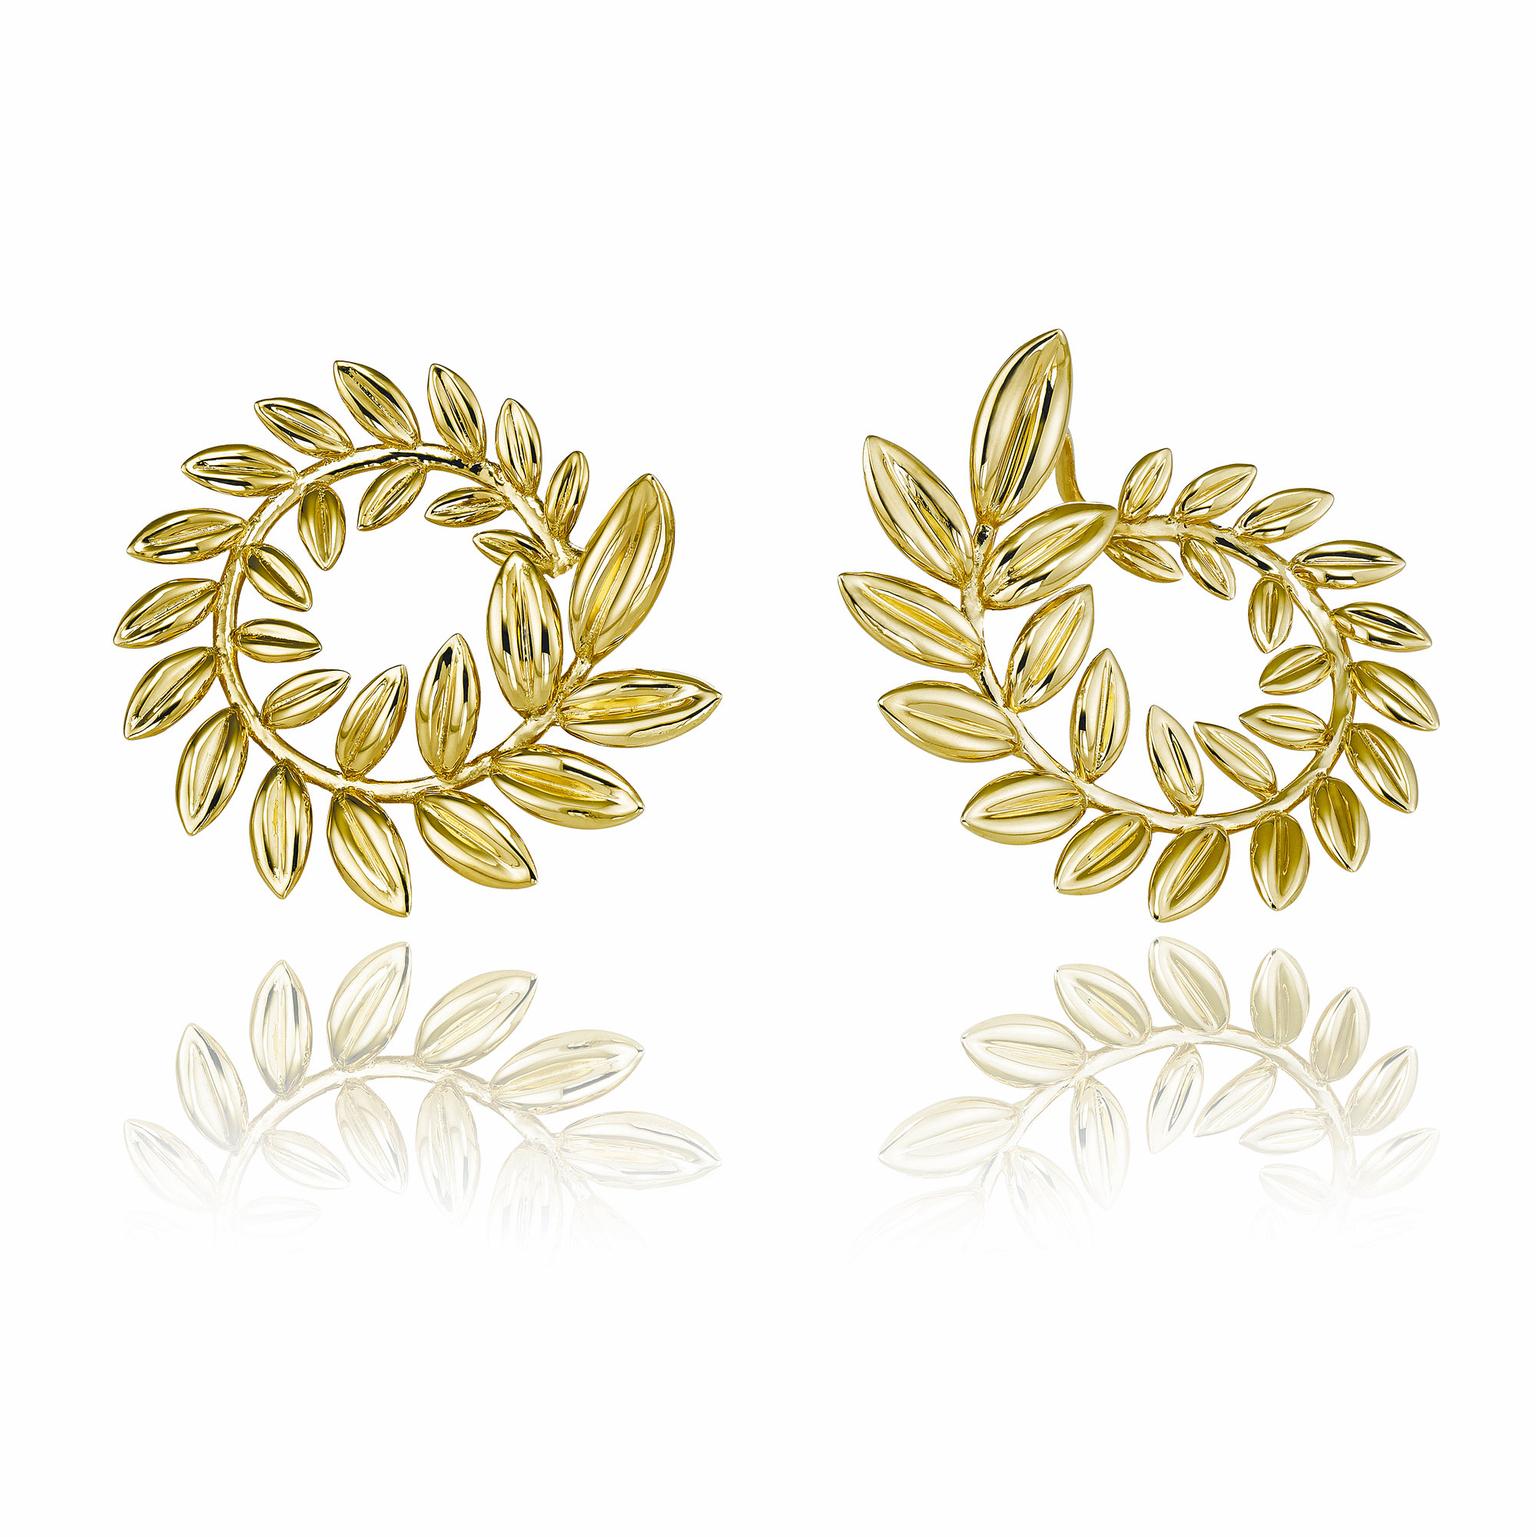 Chopard Fairmined yellow gold earrings